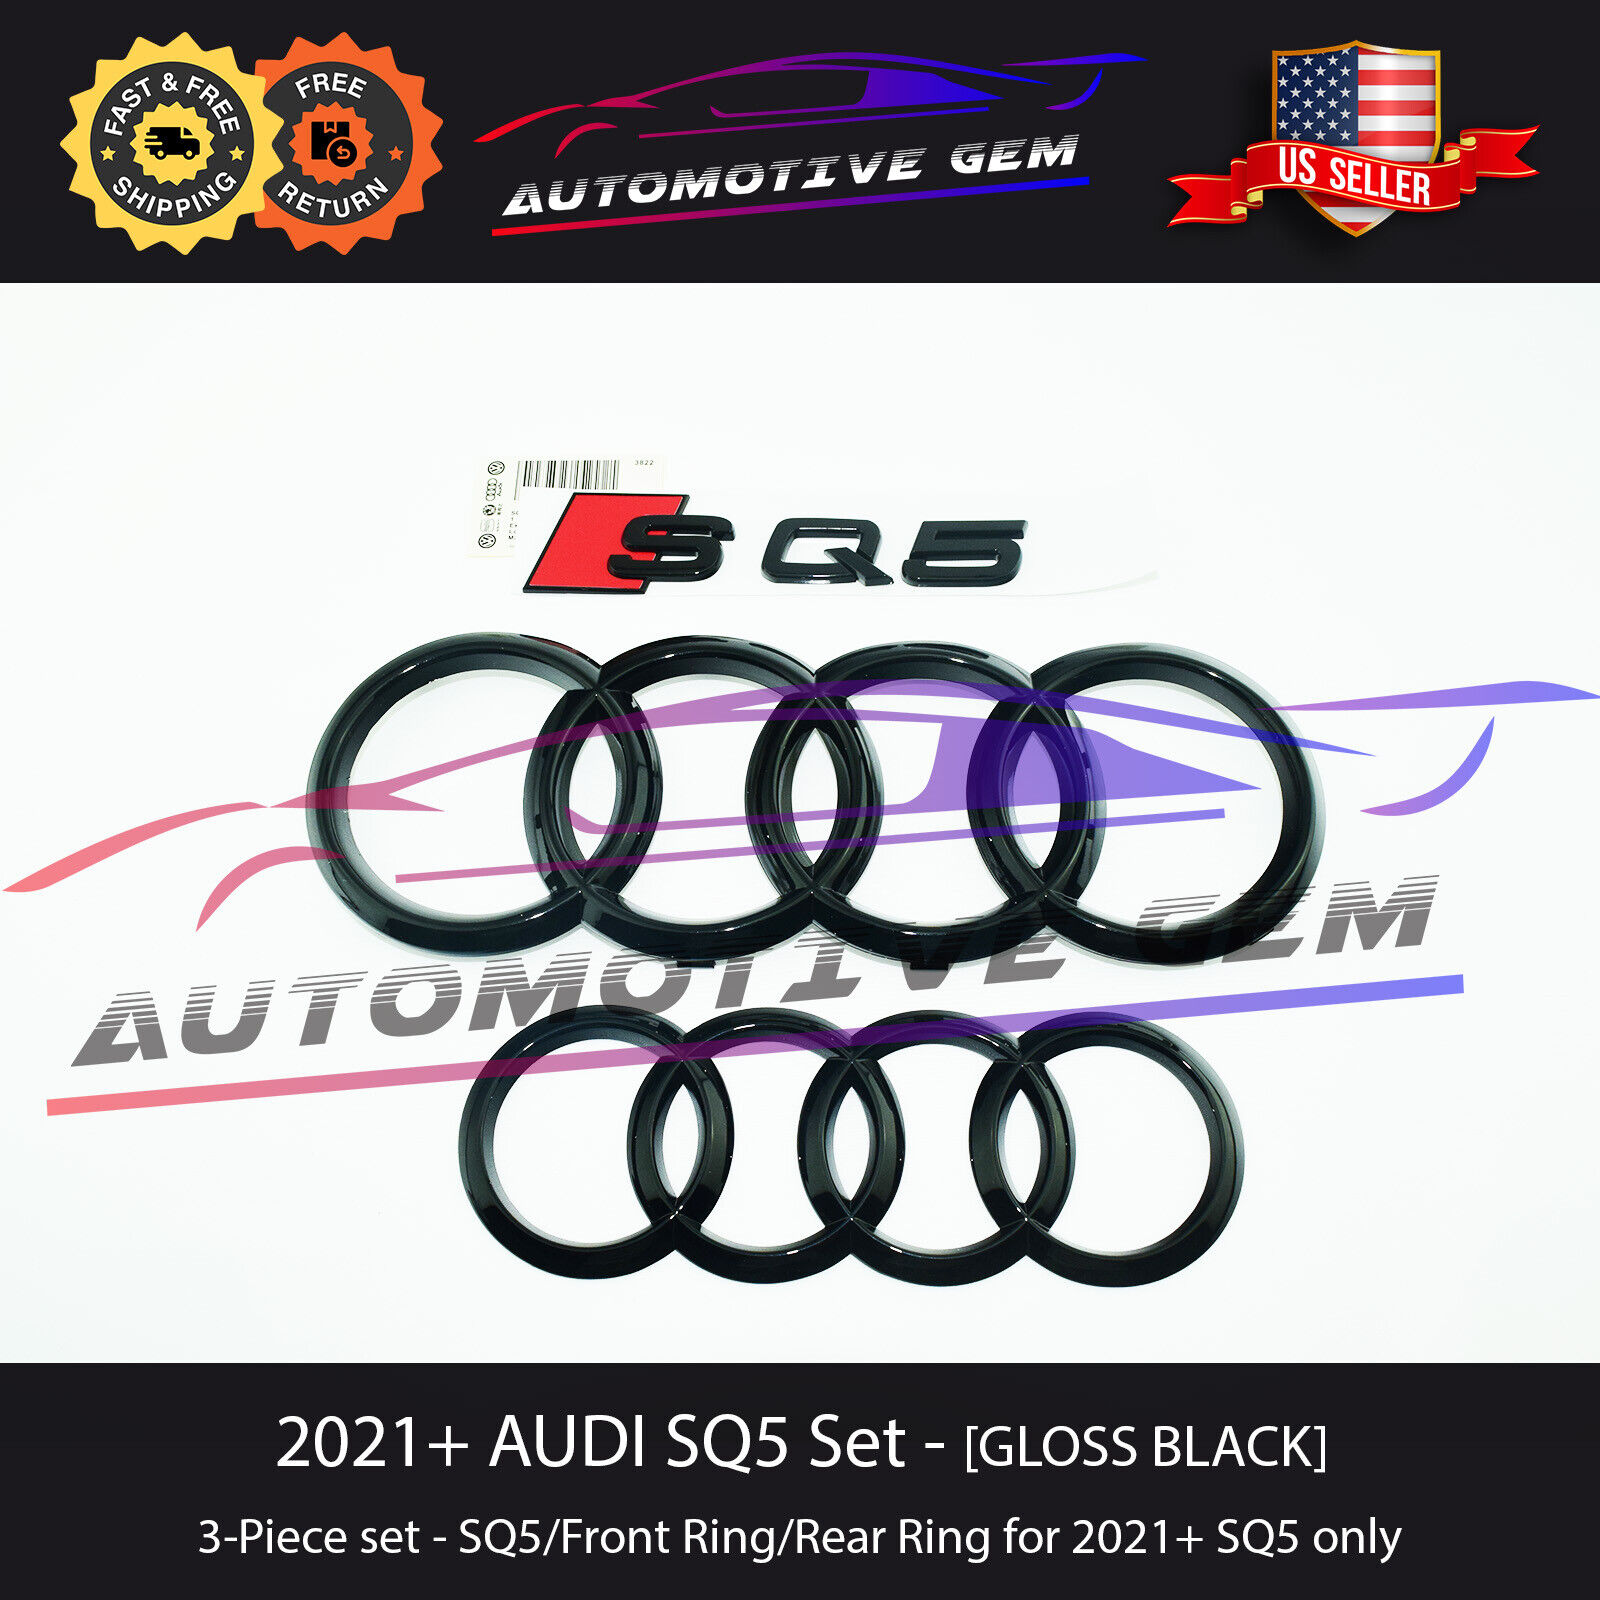 Audi SQ5 Rings GLOSS BLACK Emblem Front Grille Rear Trunk Badge OEM Set 2021+